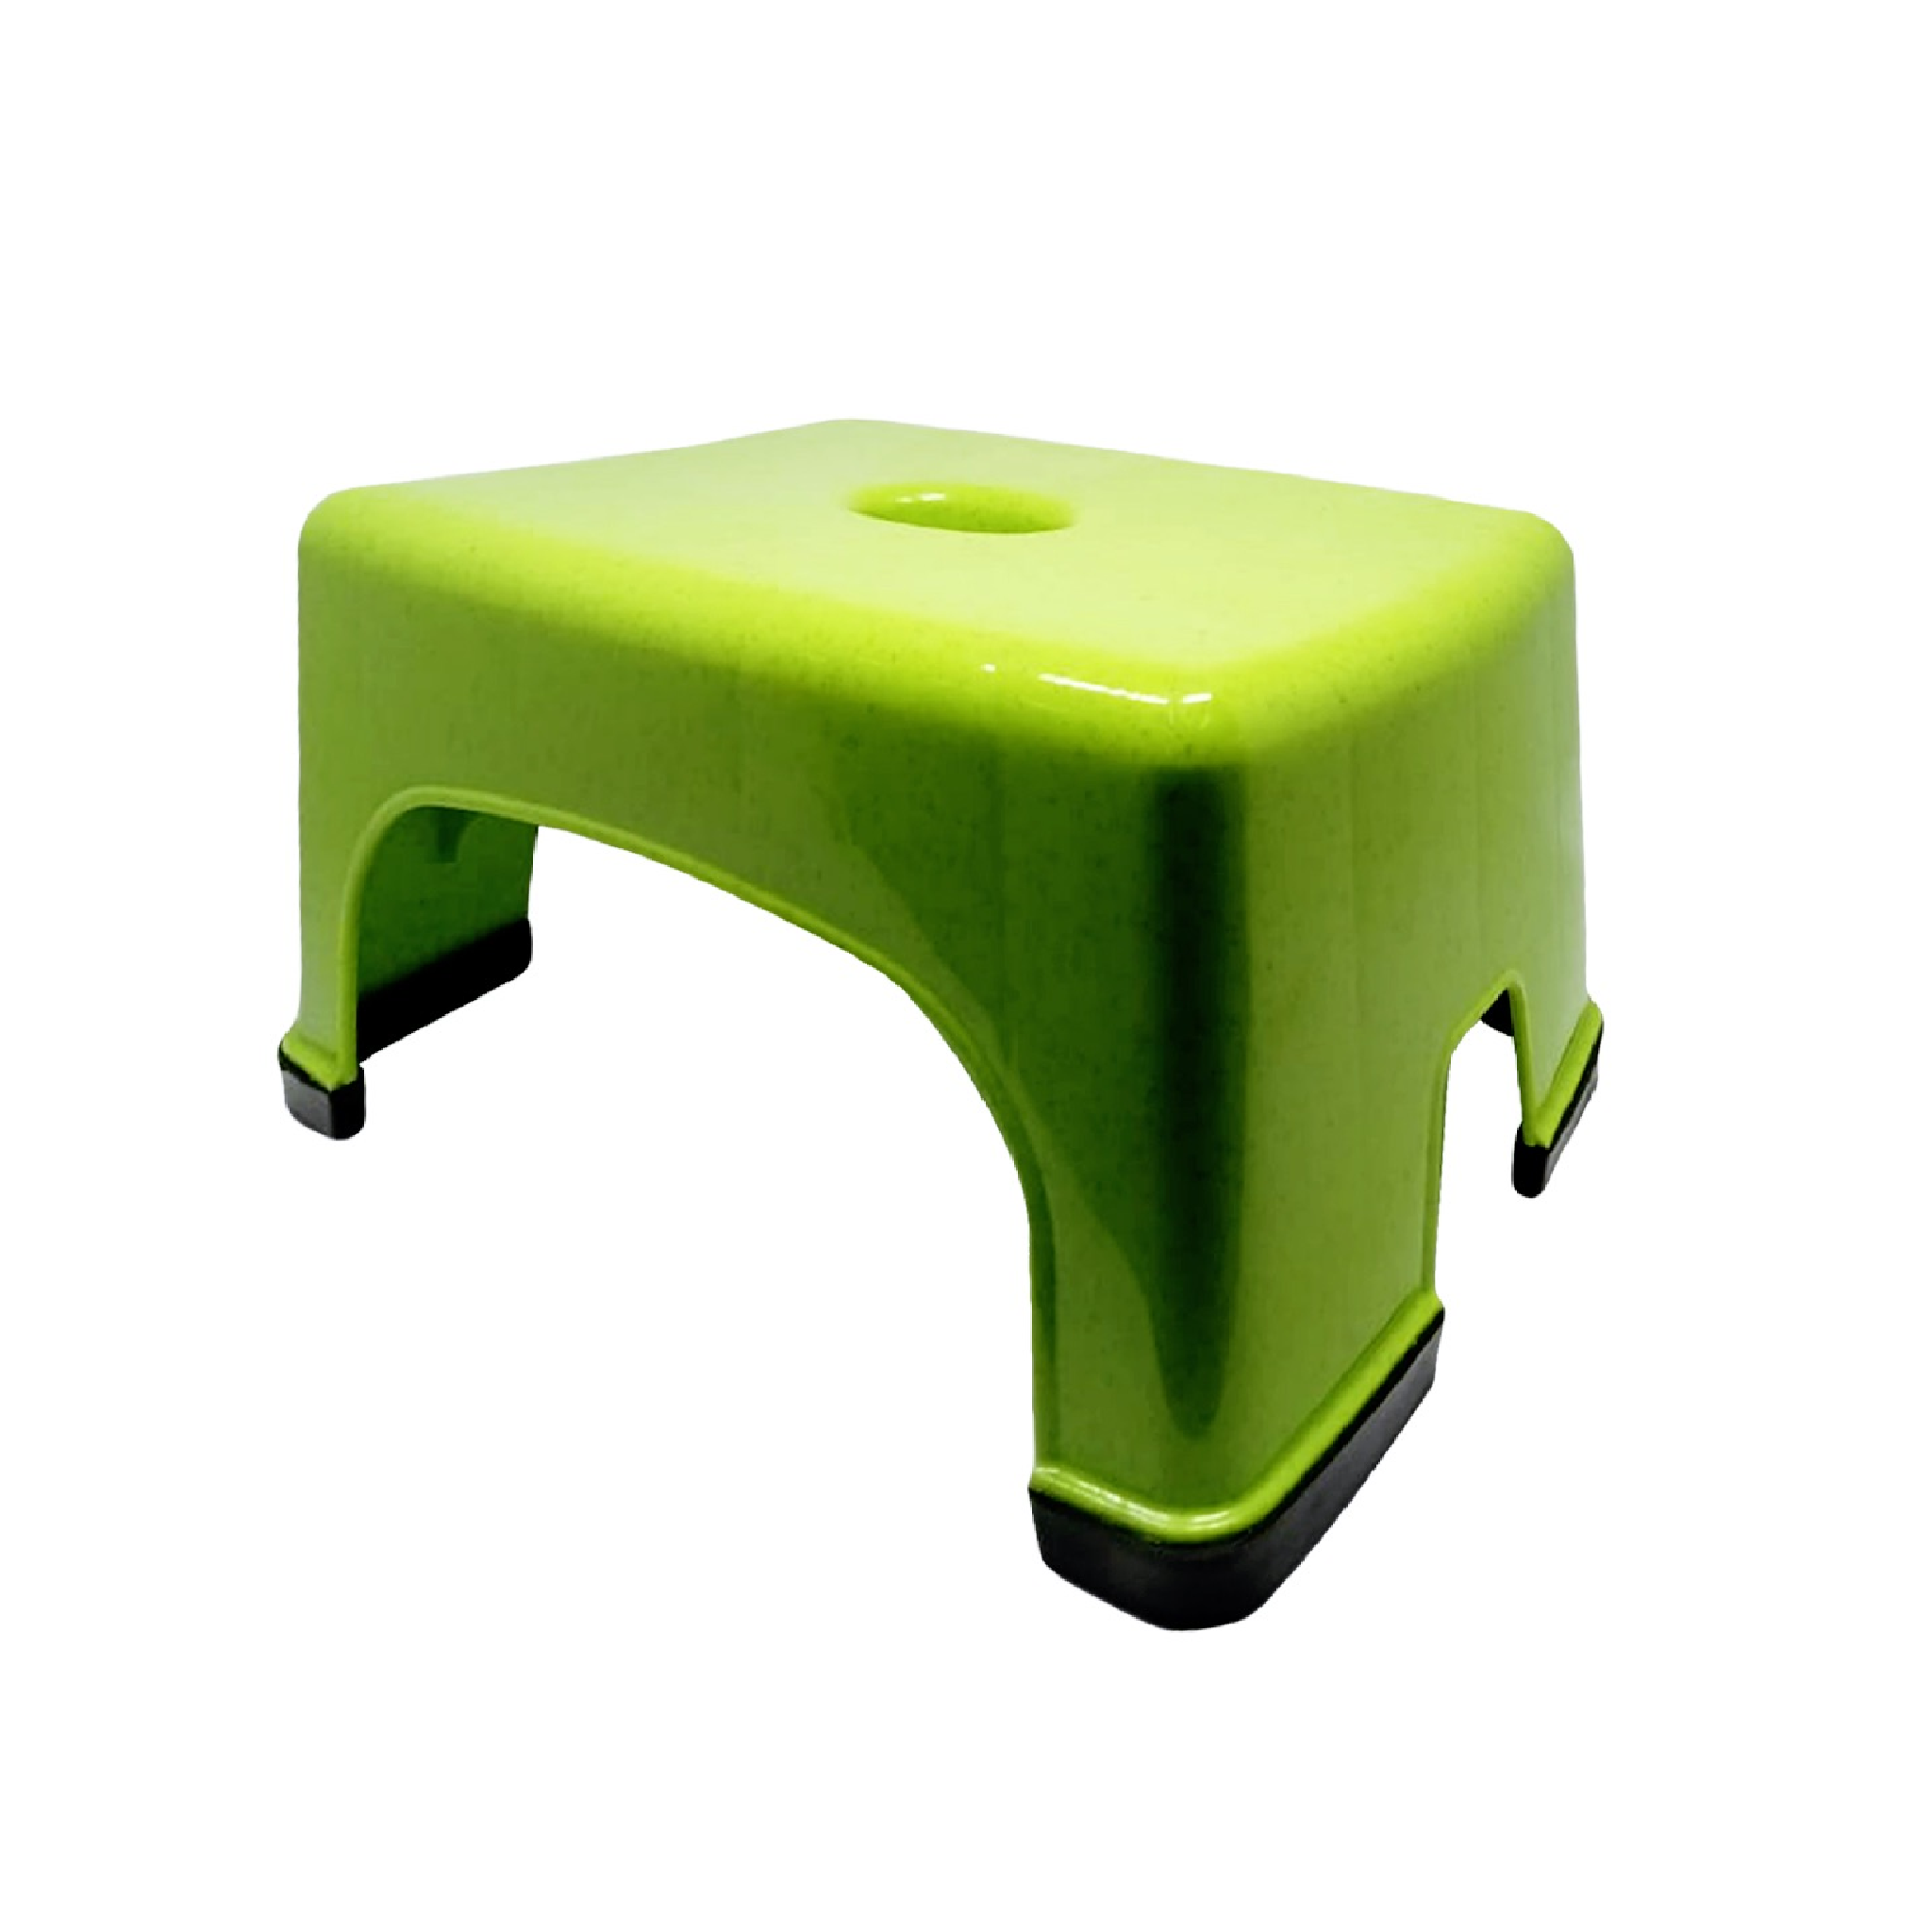 MCWARES RECTANGULAR Plastic Stool Heavy Duty Green